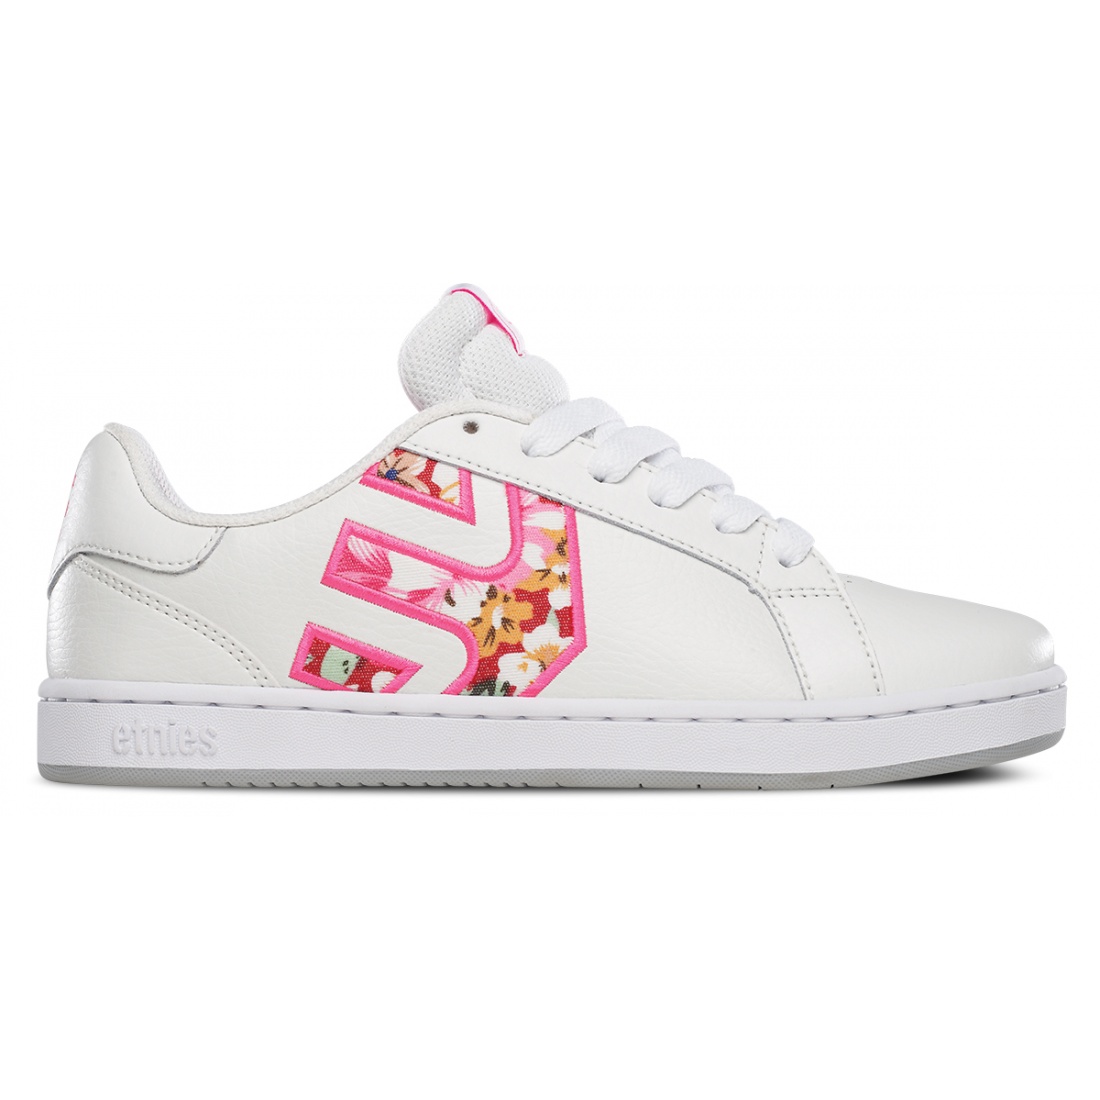 ETN-Fader LS White/Pink/White Girls Shoes